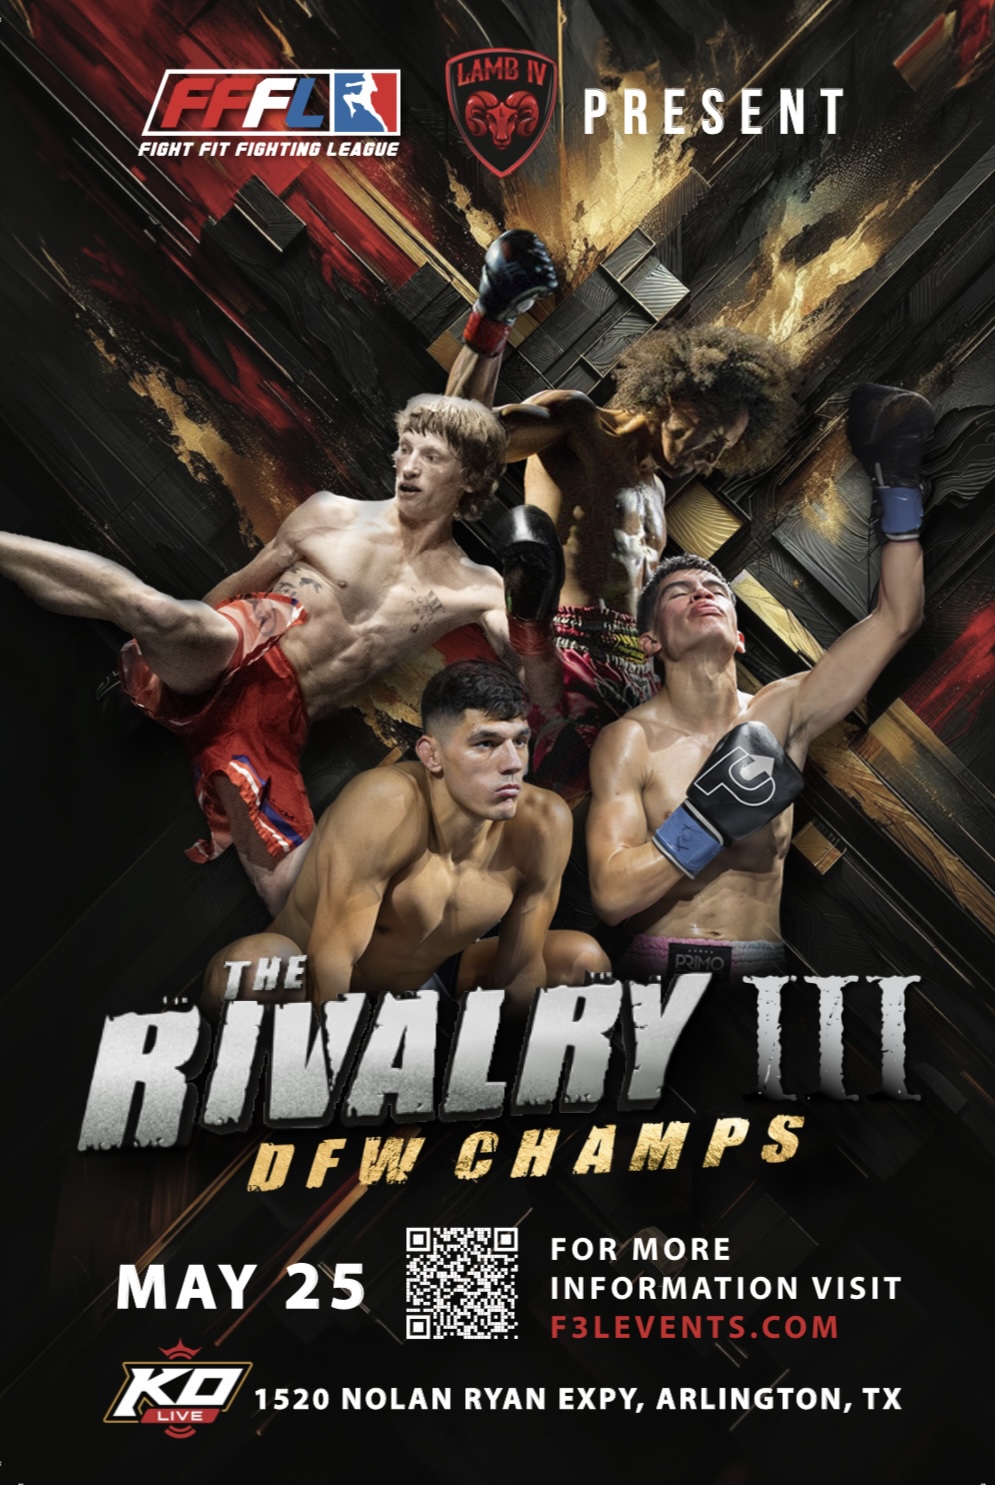 F3L and LambIV Present “The Rivalry III: DFW Champs” Live MMA Event in Arlington, Texas